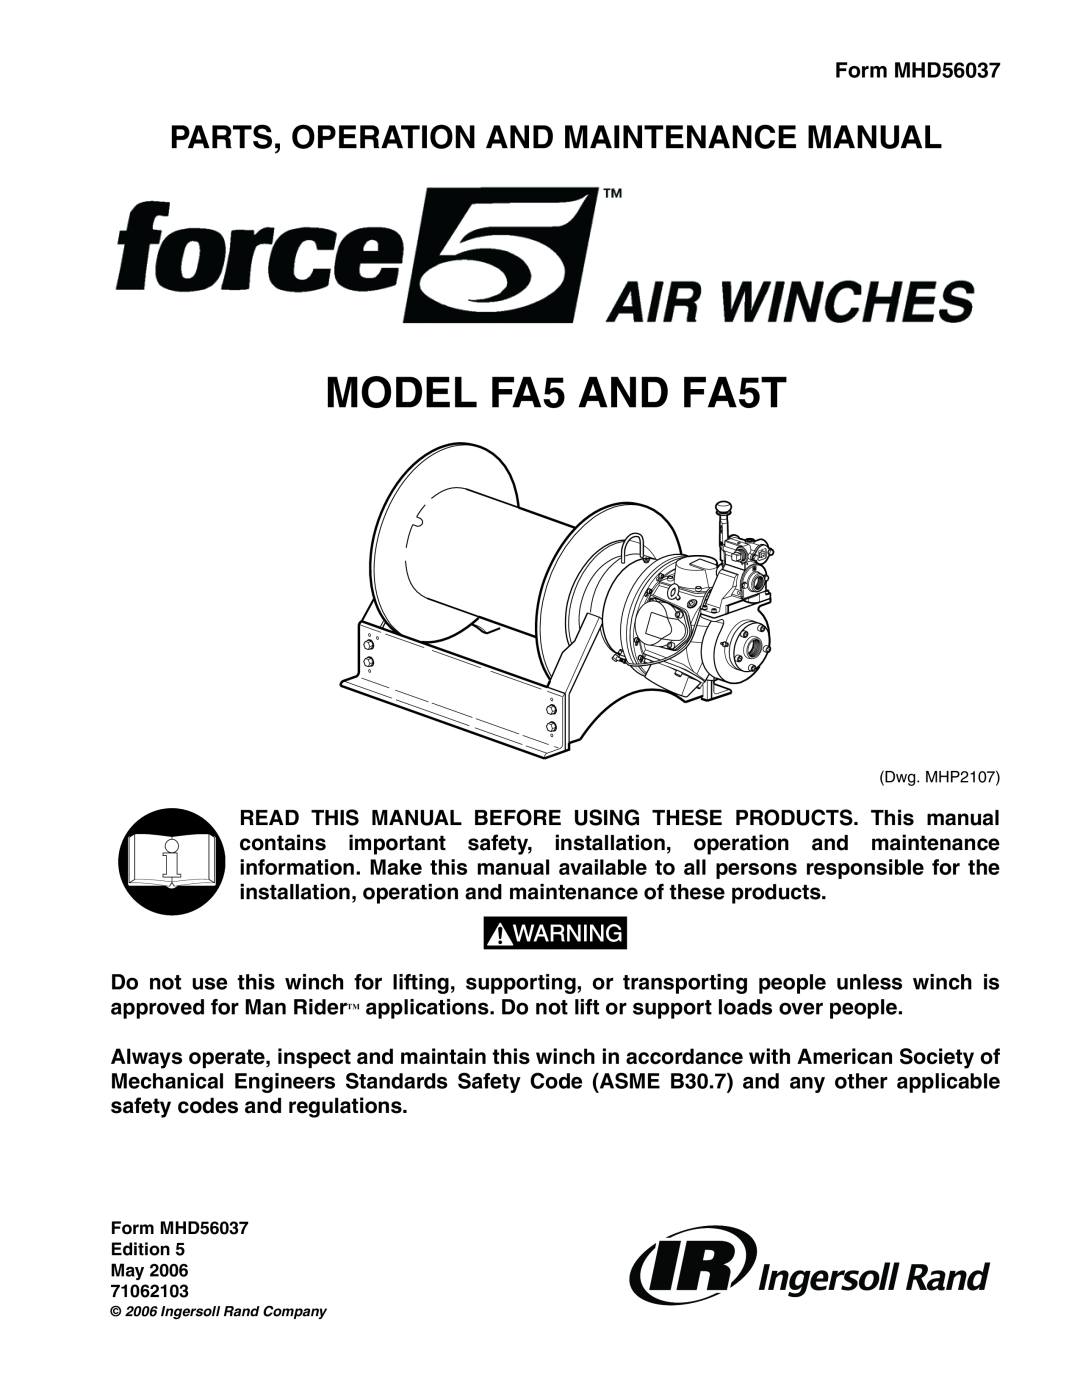 Ingersoll-Rand manual MODEL FA5 AND FA5T, Parts, Operation And Maintenance Manual 